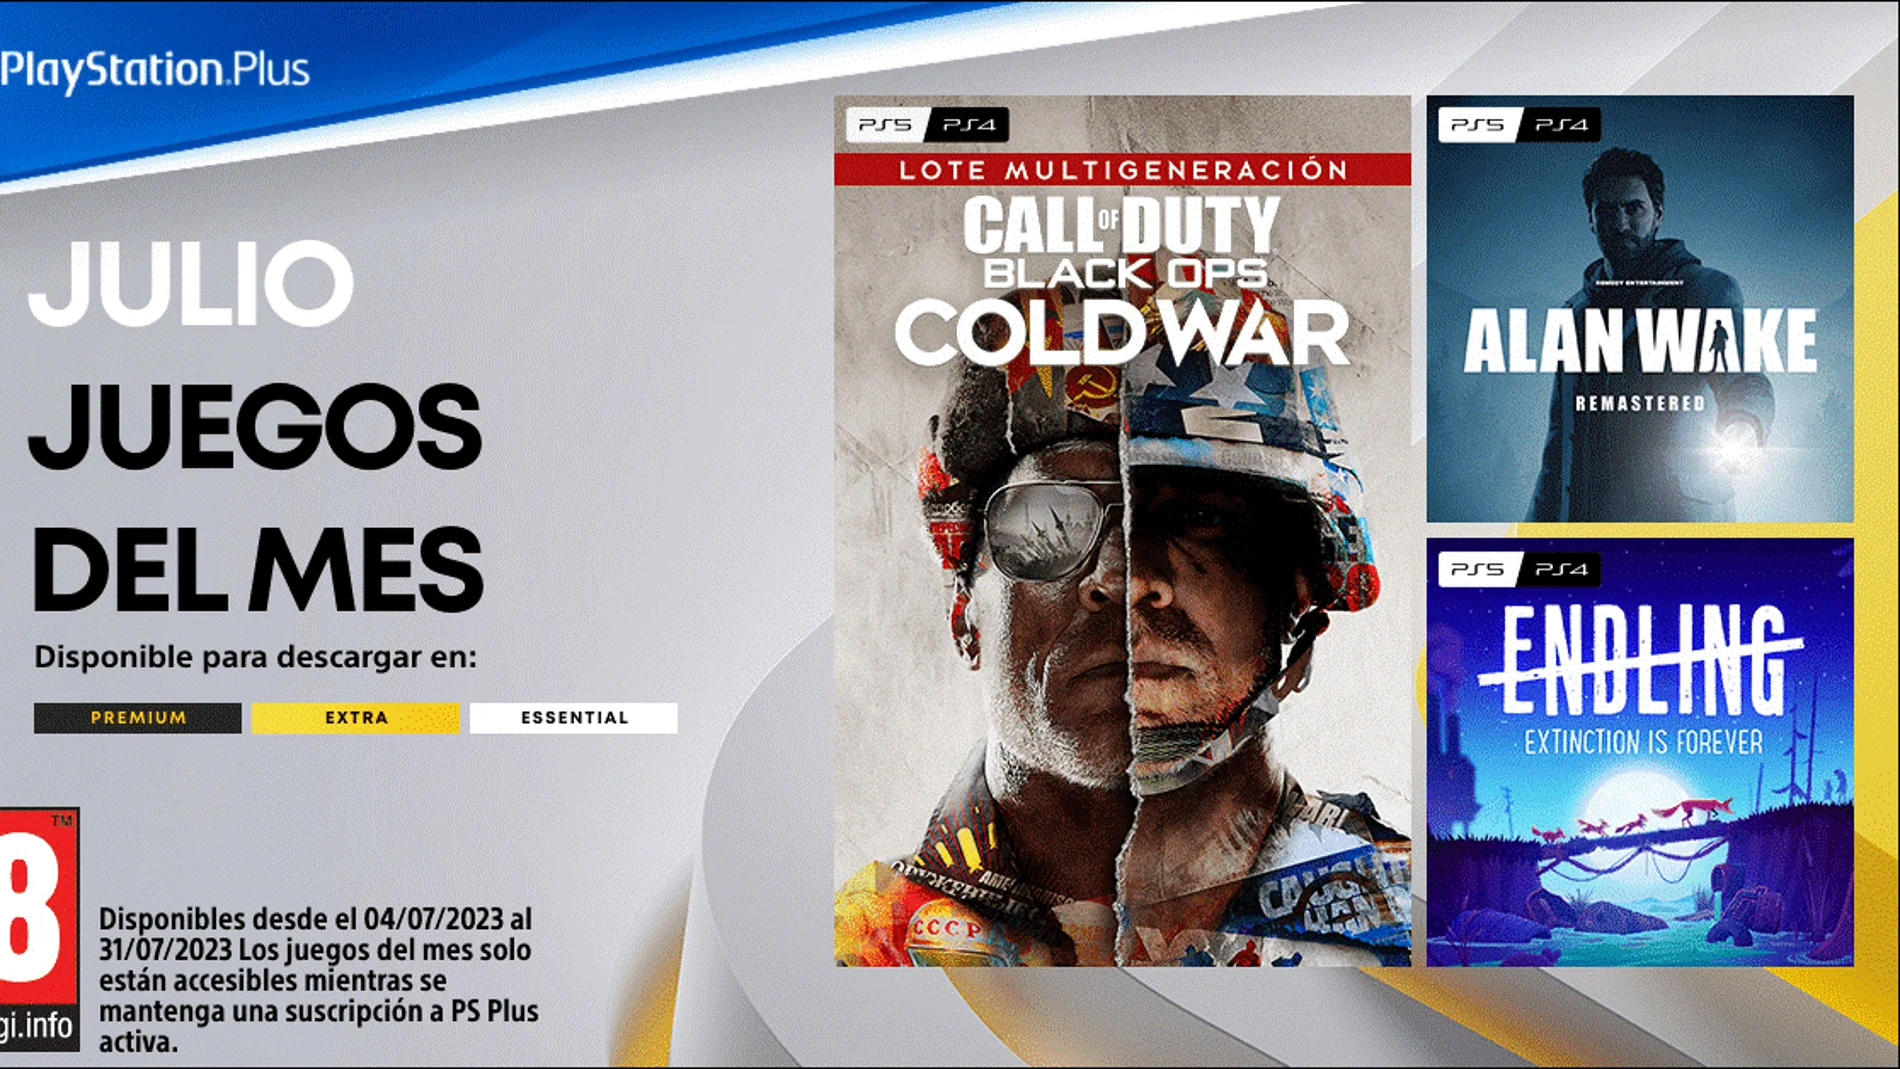 Call of Duty: Black Ops Cold War - Lote Multigeneración, Alan Wake Remastered y Endling - Extintion is Forever llegan en julio a PlayStation Plus